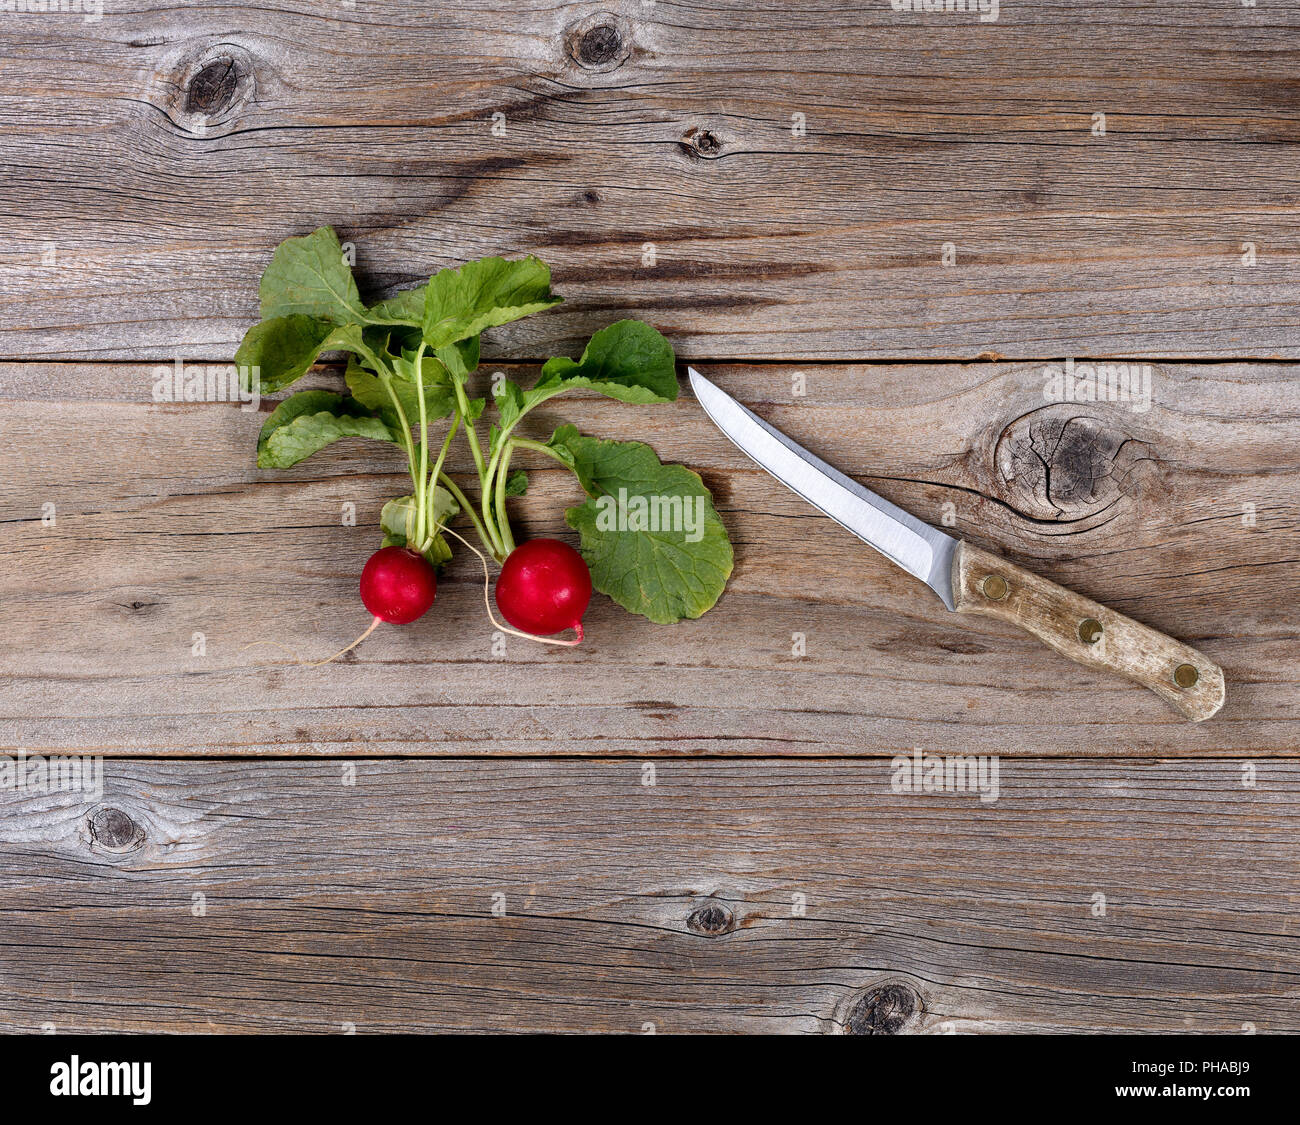 Fresh radish and paring knife on rustic wood Stock Photo